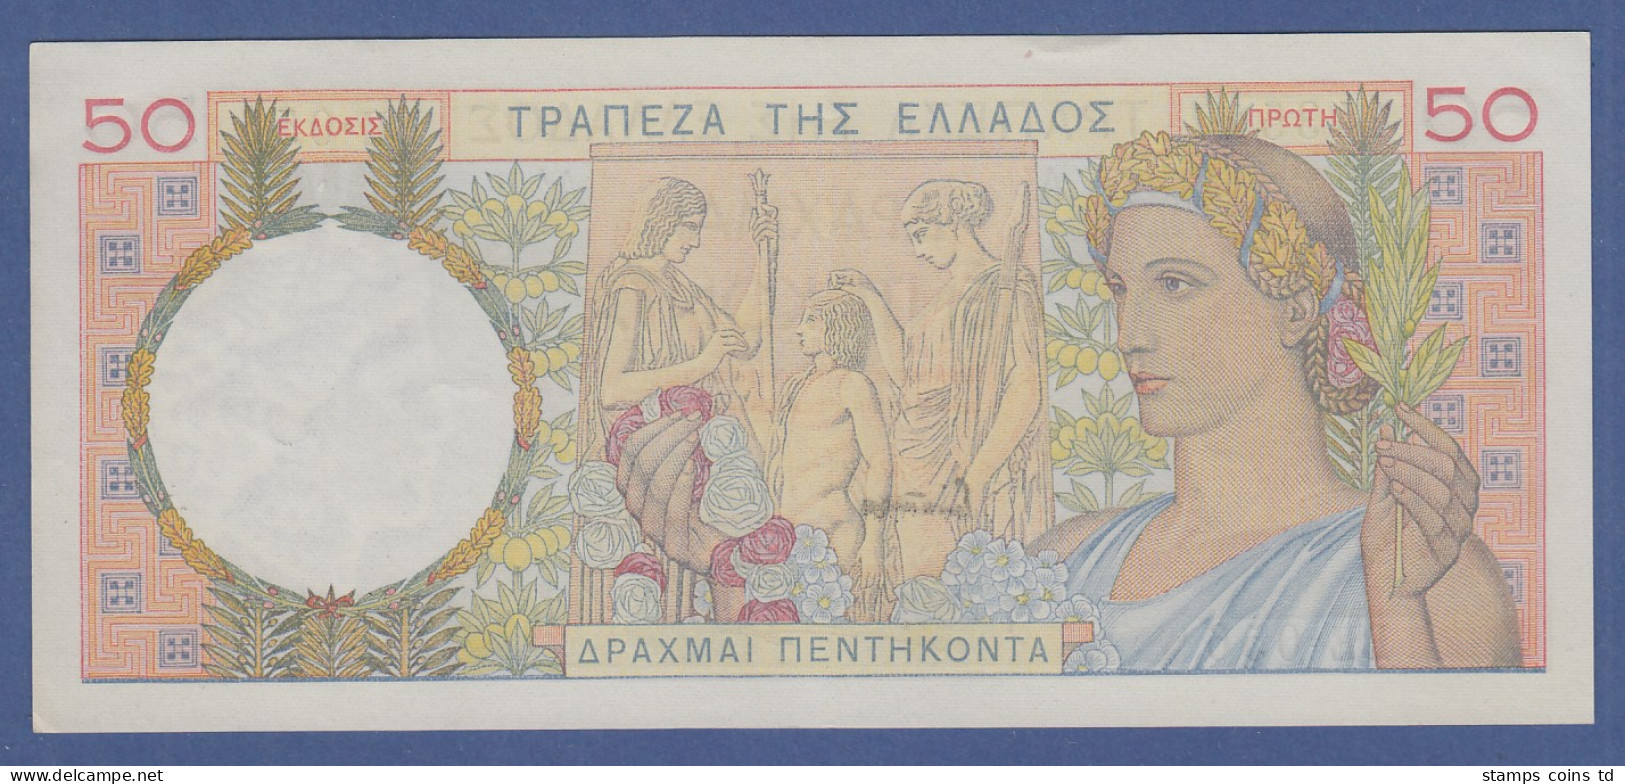 Banknote Griechenland 50 Drachmen 1935 - Greece